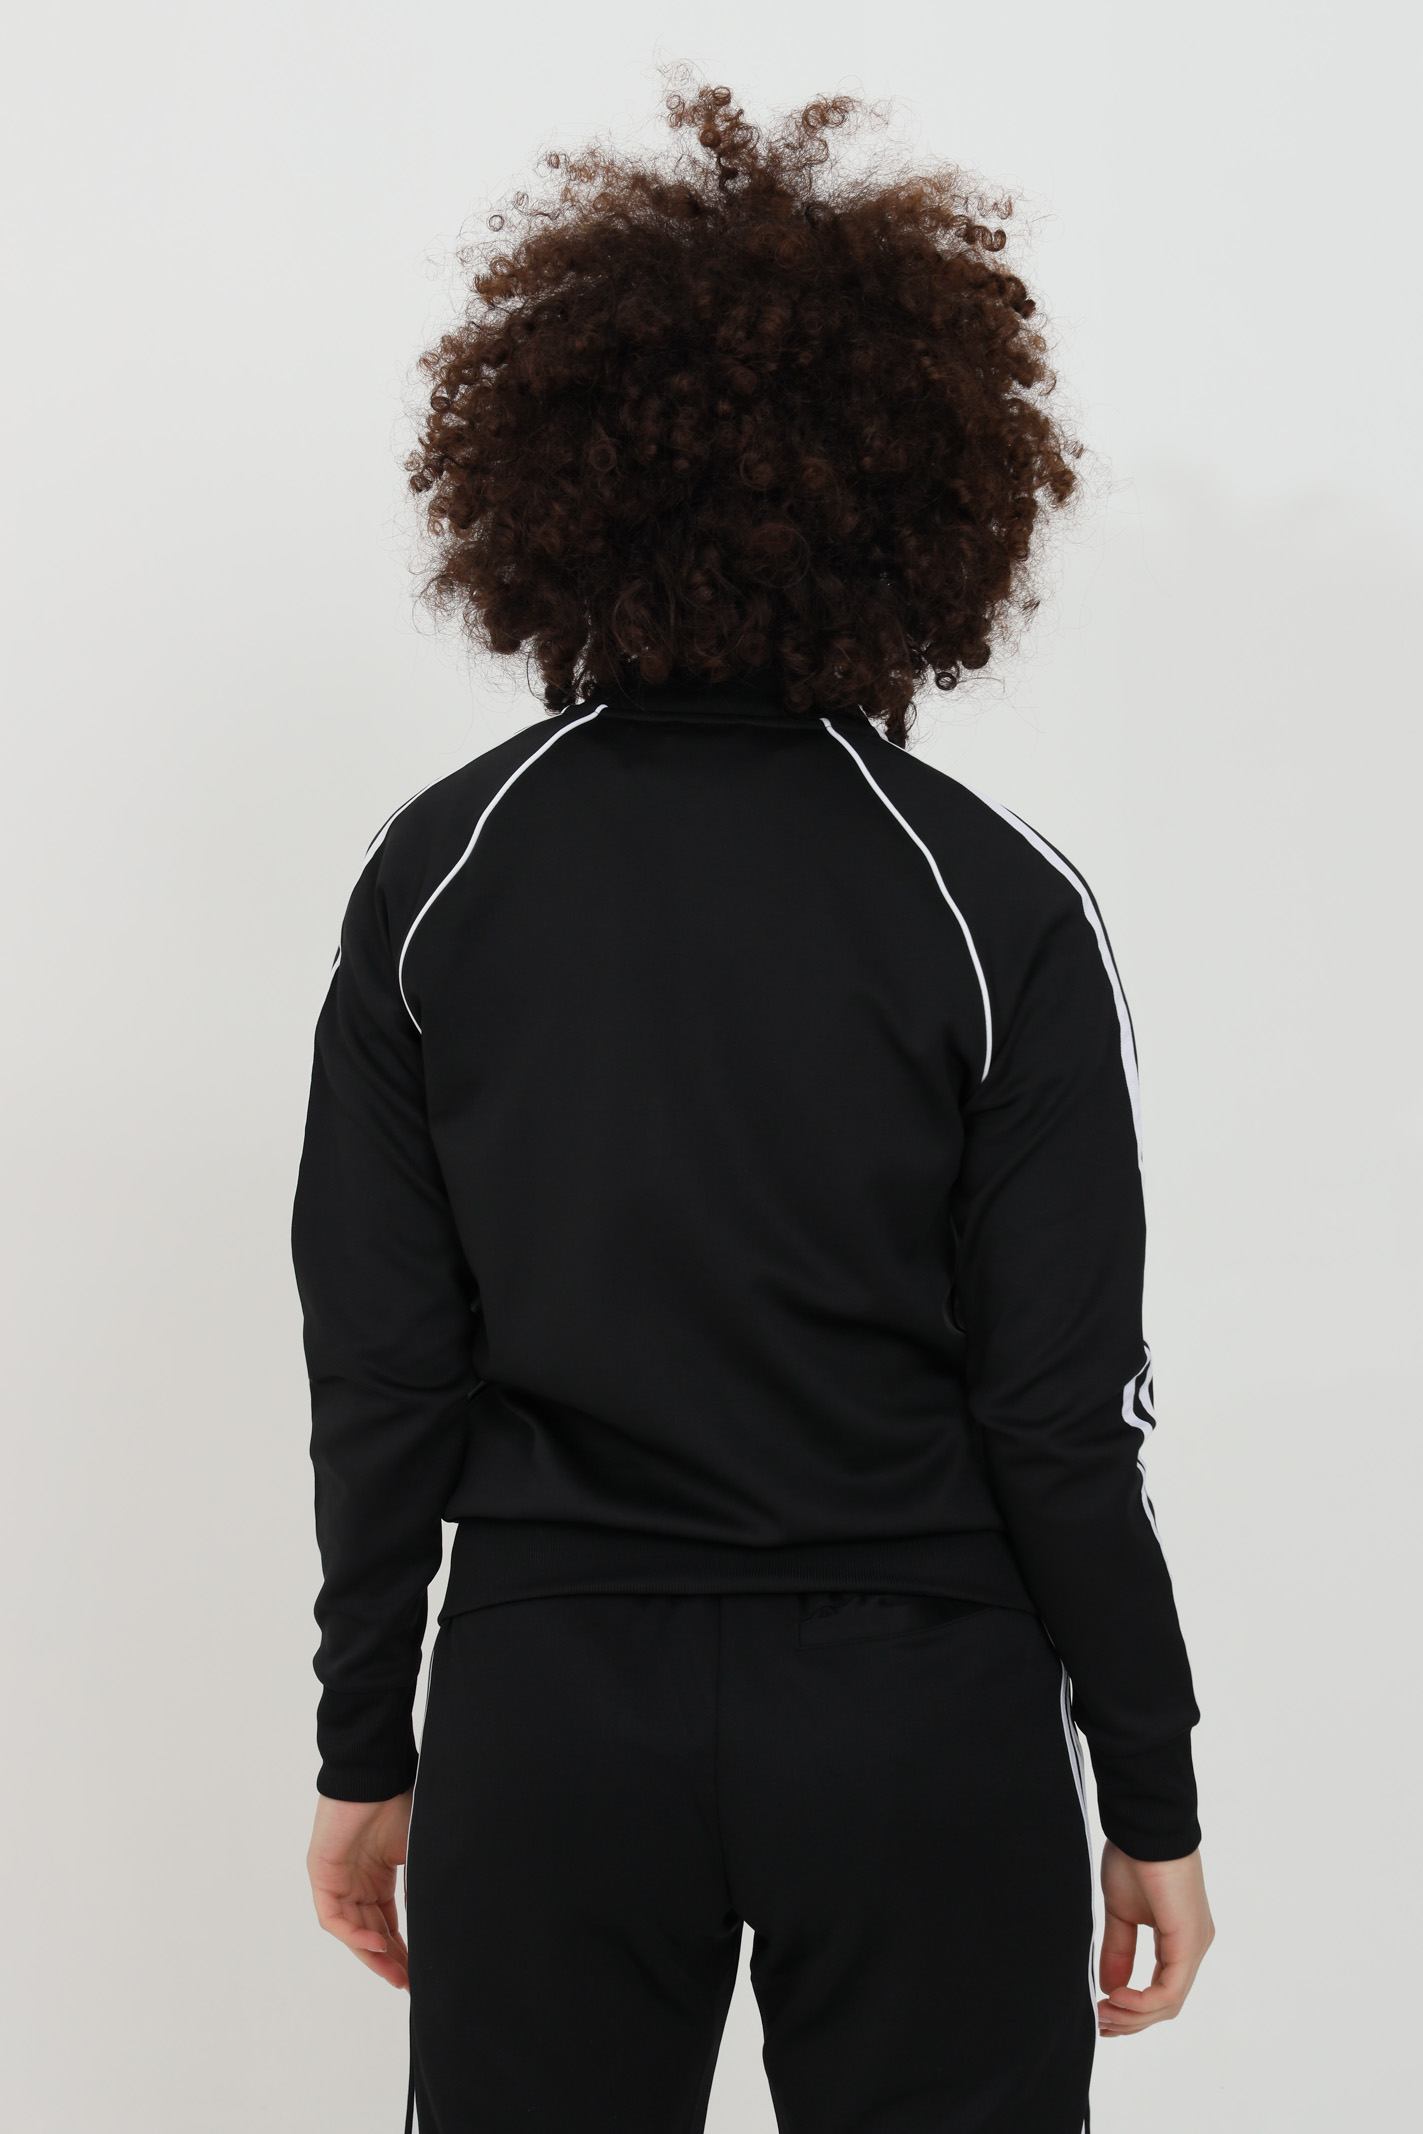 Primeblue sst black sweatshirt for women with full zip ADIDAS | GD2374.